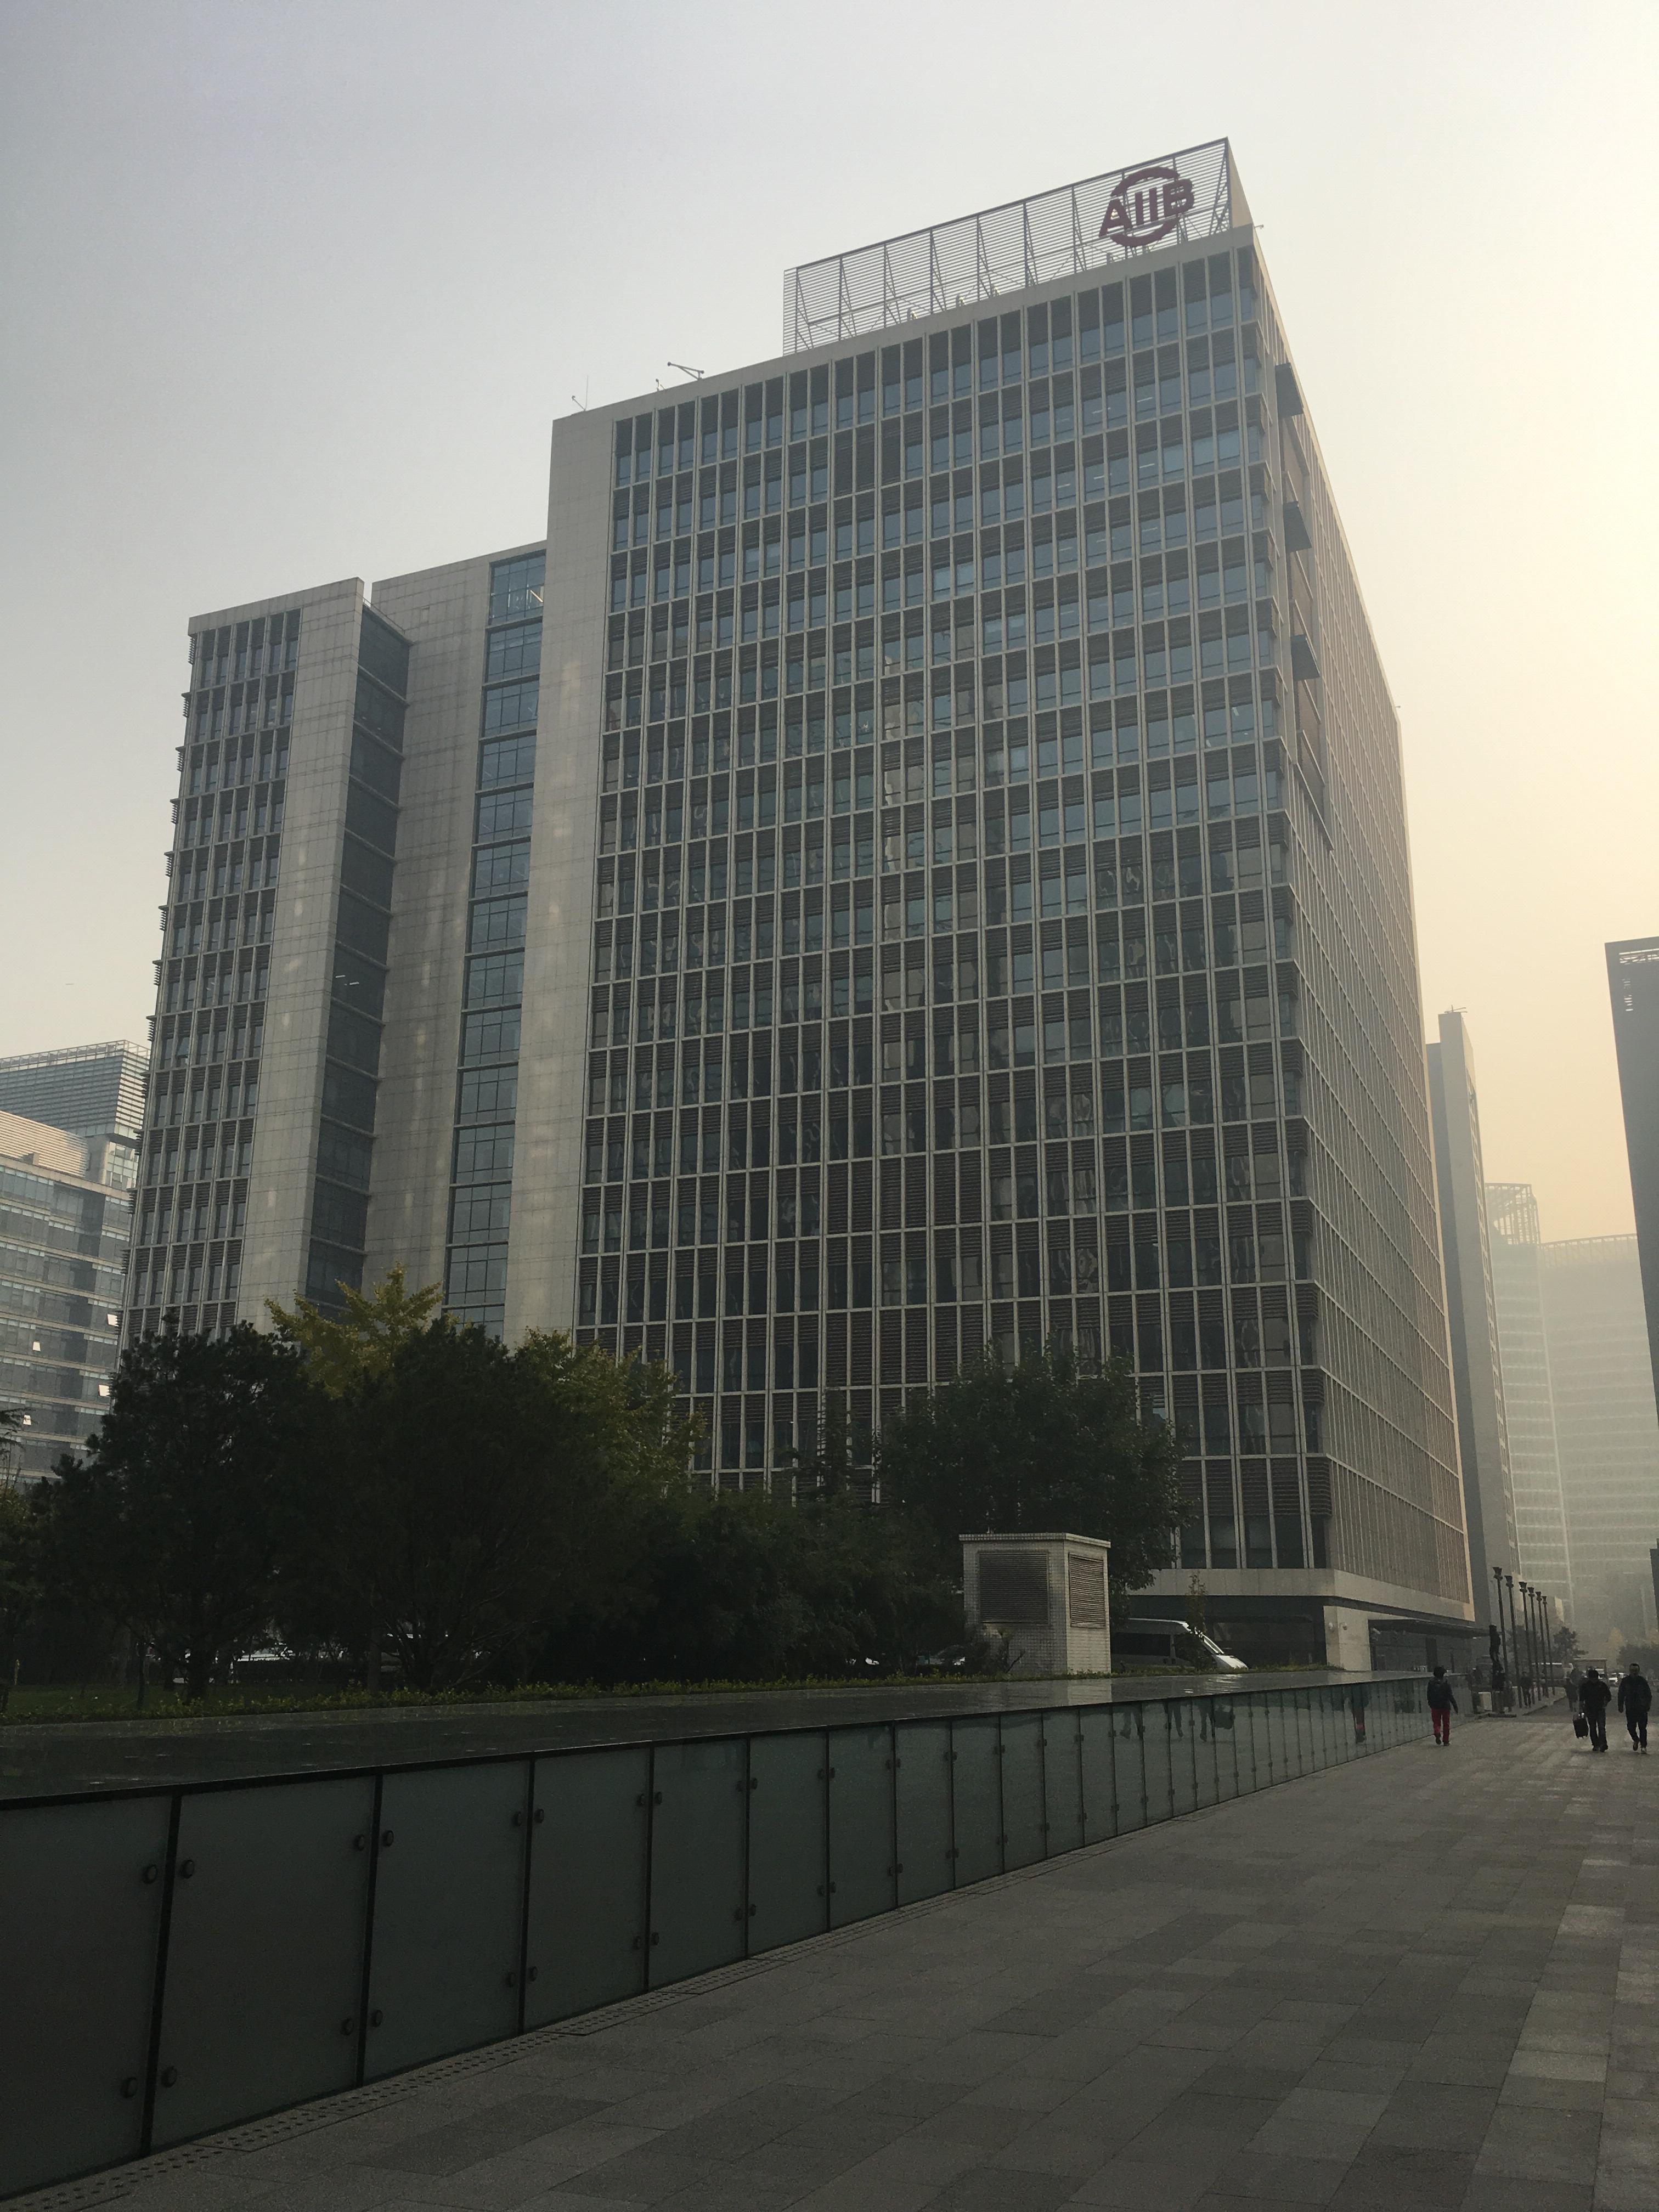 AIIB Headquarters, Beijing. (Photo: Max12Max)